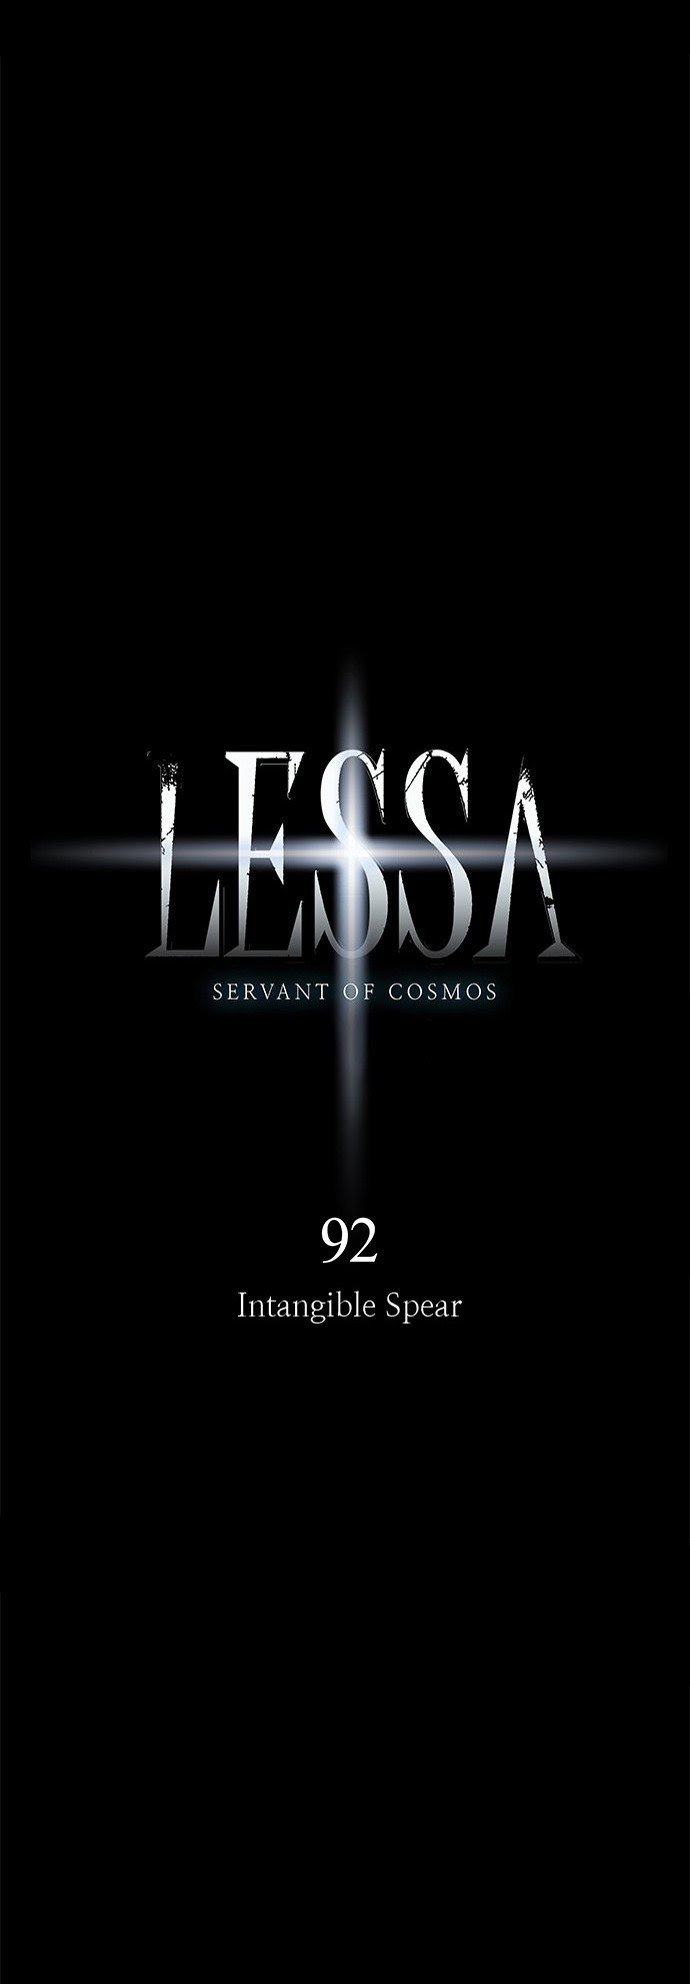 Lessa Servant Of Cosmos Chapter 92